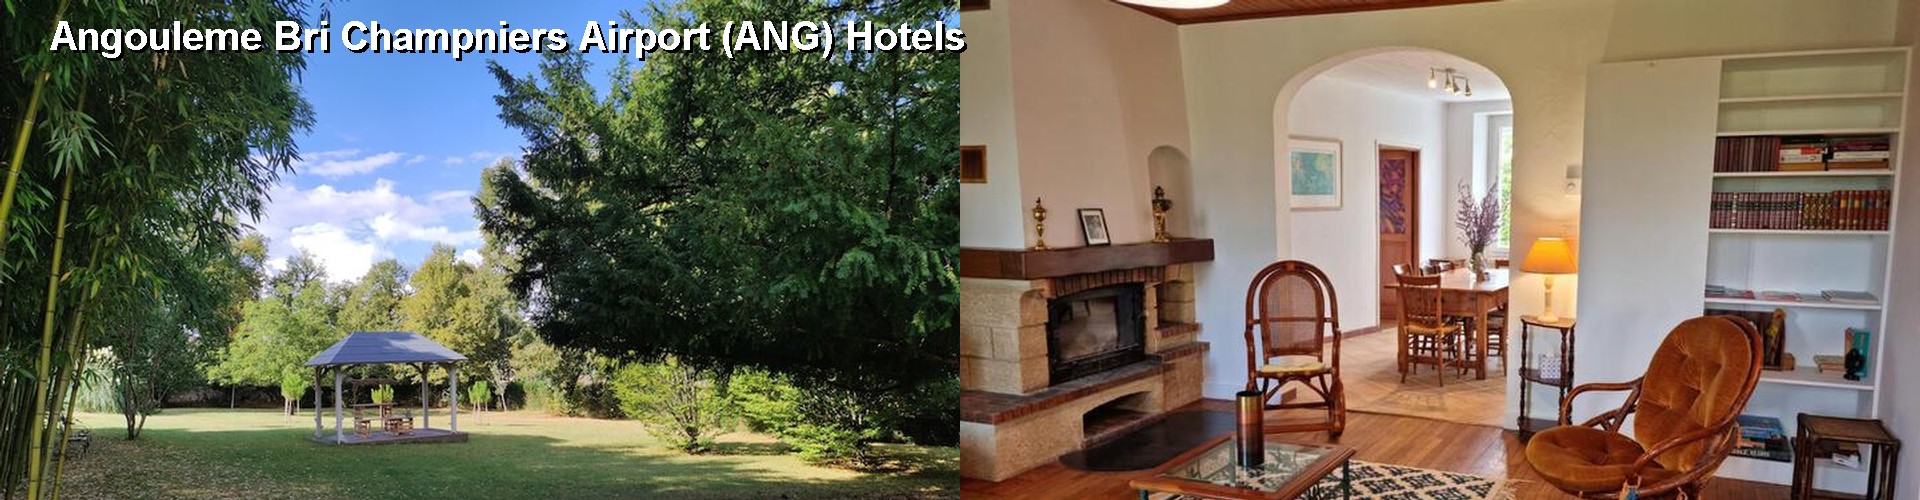 5 Best Hotels near Angouleme Bri Champniers Airport (ANG)